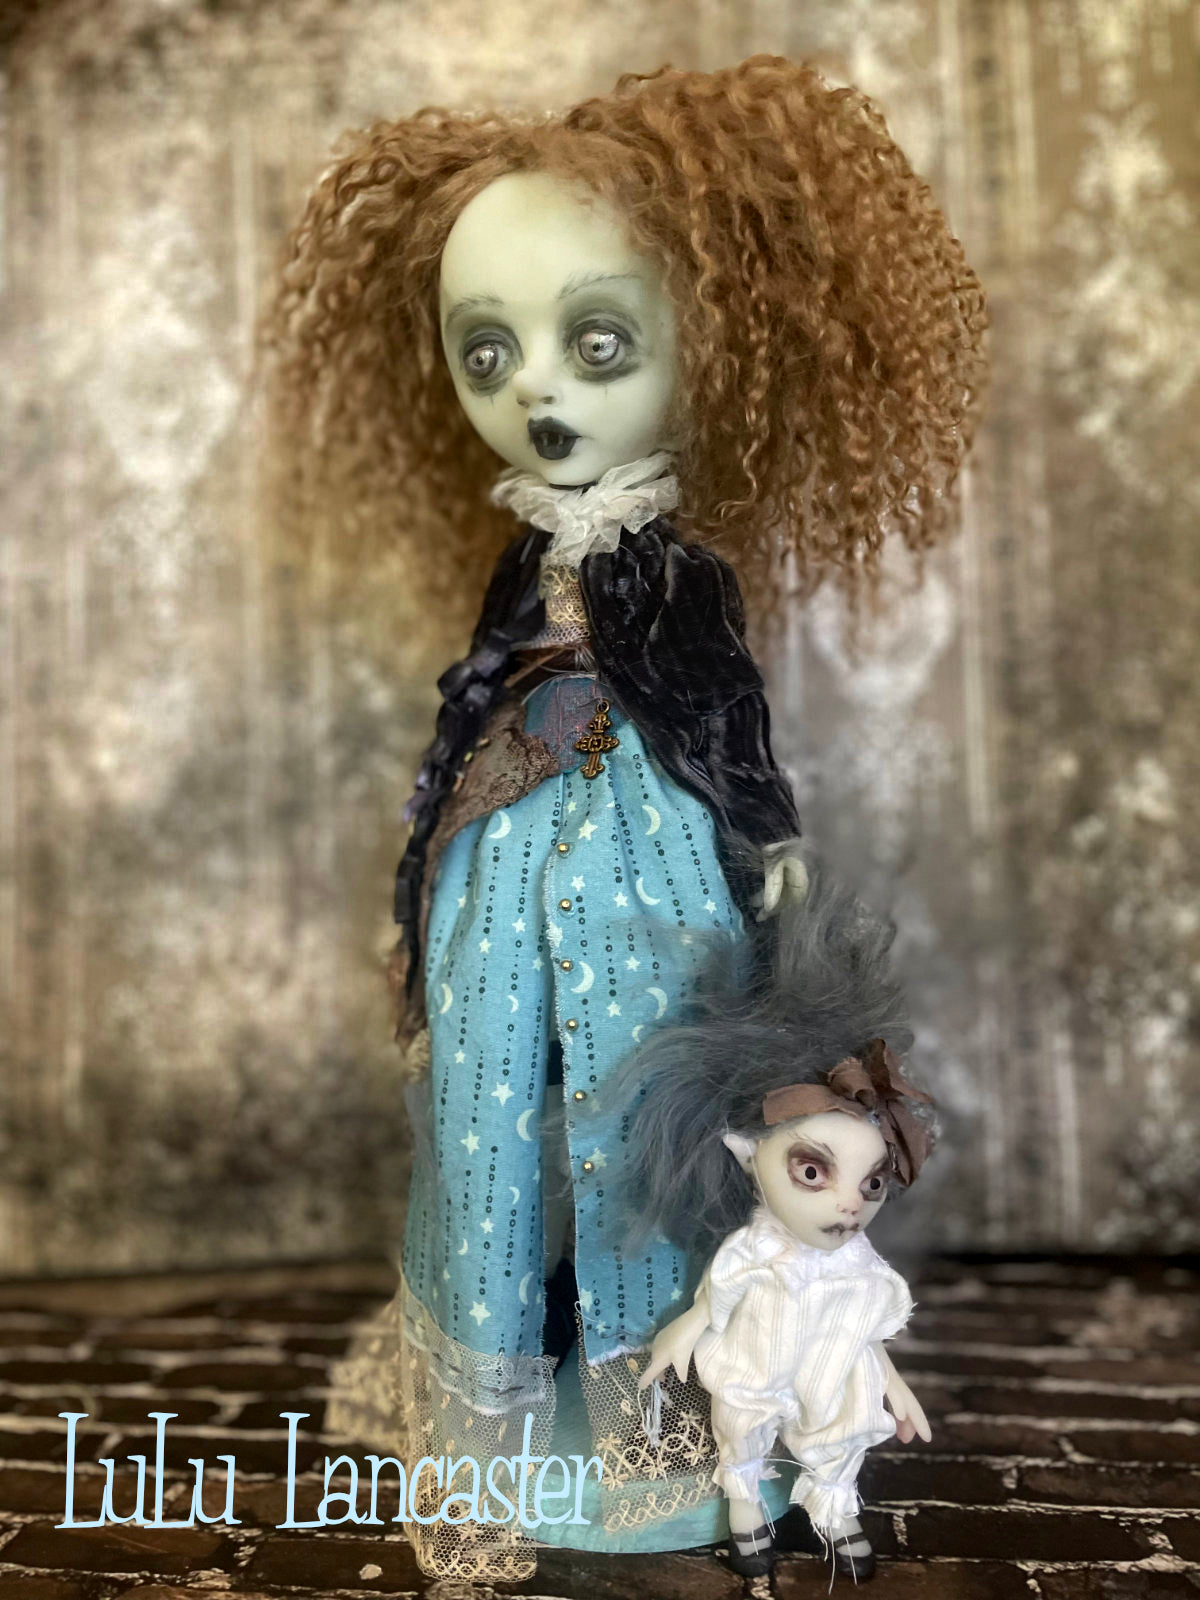 Arliss The glowie Vampire Original LuLu Lancaster Art Doll